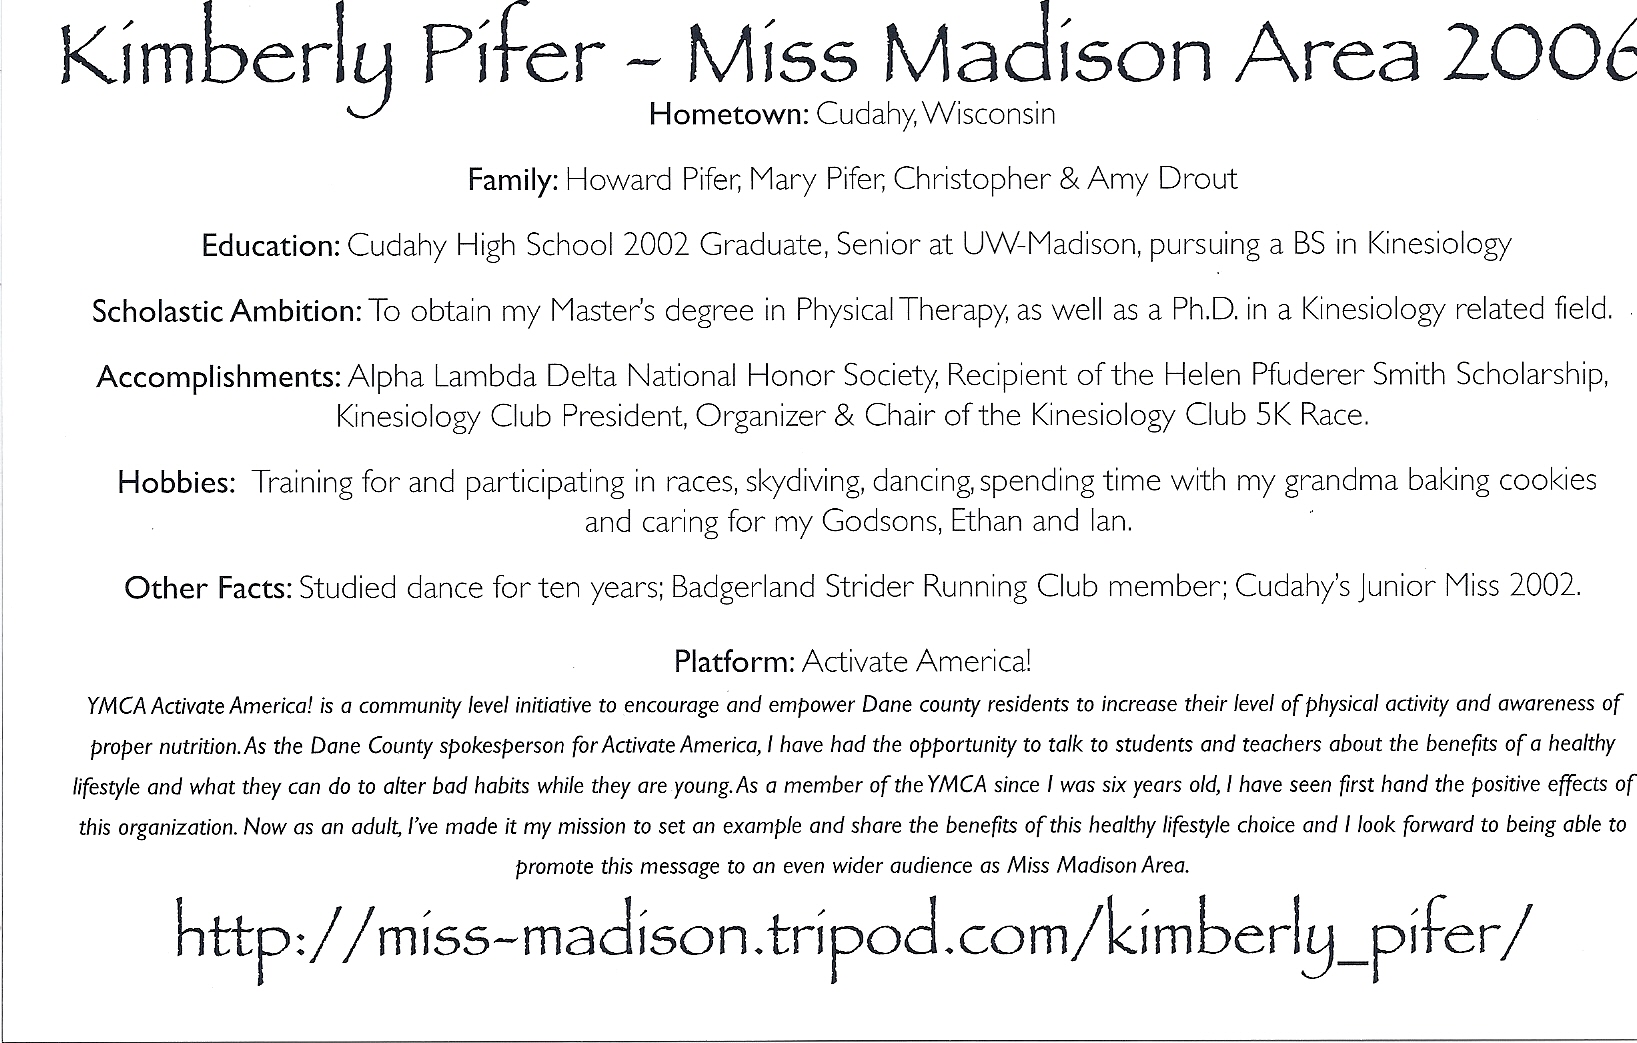 Kimberly Pifer, Miss Madison Area 2006